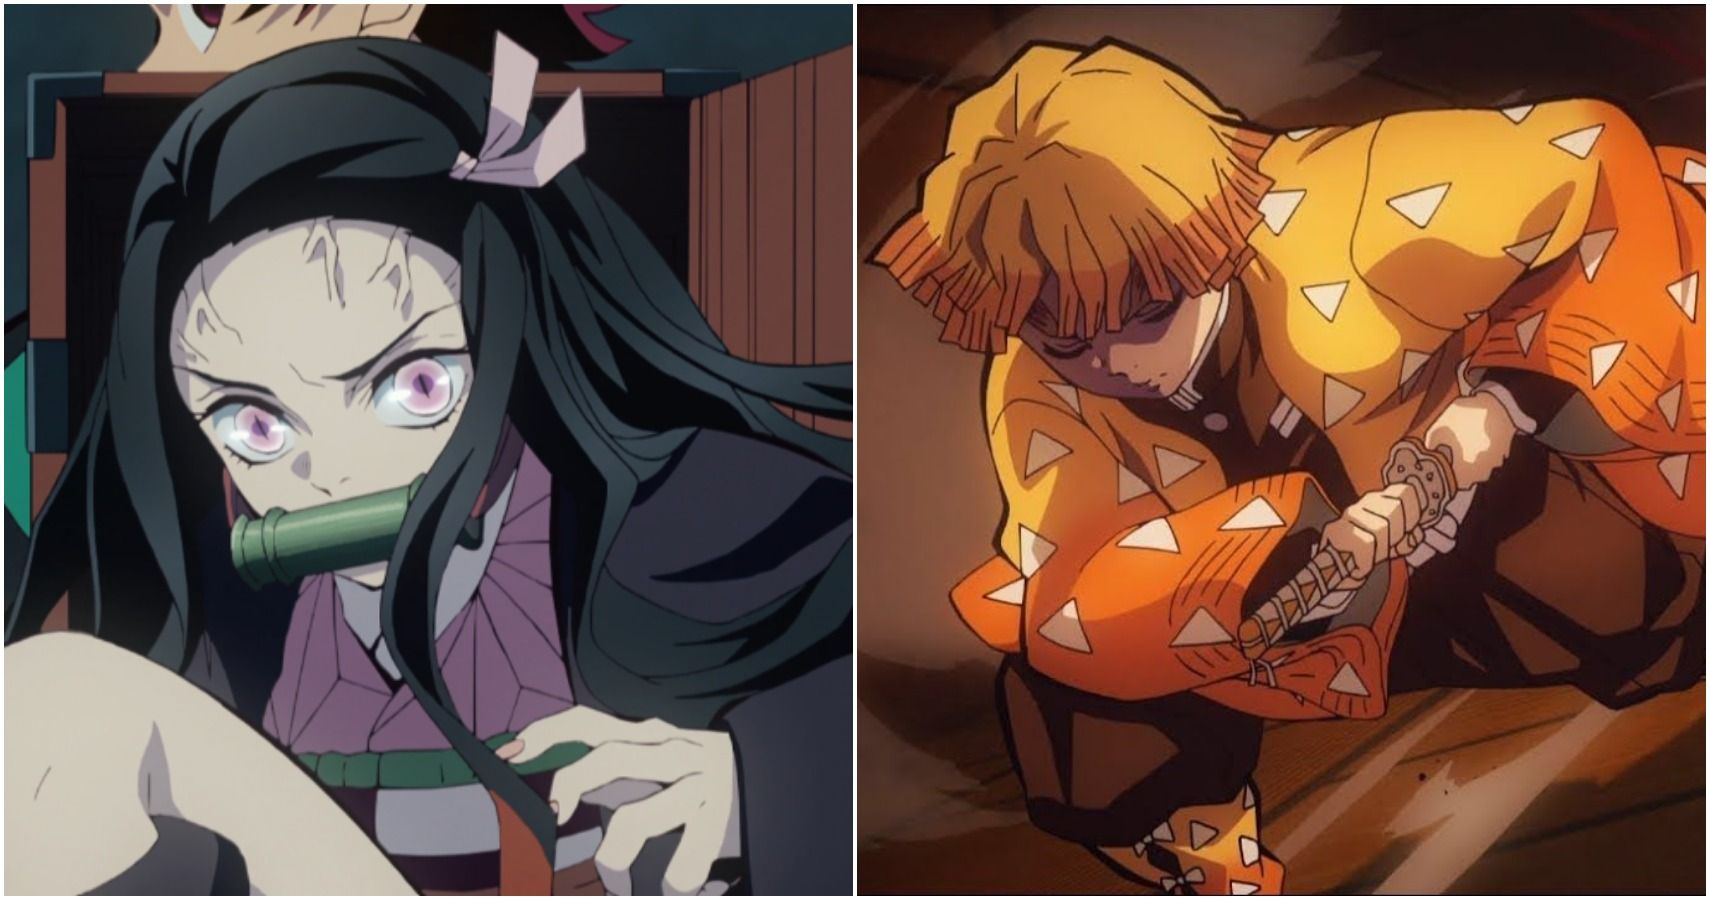 A split image of Nezuko and Zenitsu from Demon Slayer: Kimetsu no Yaiba